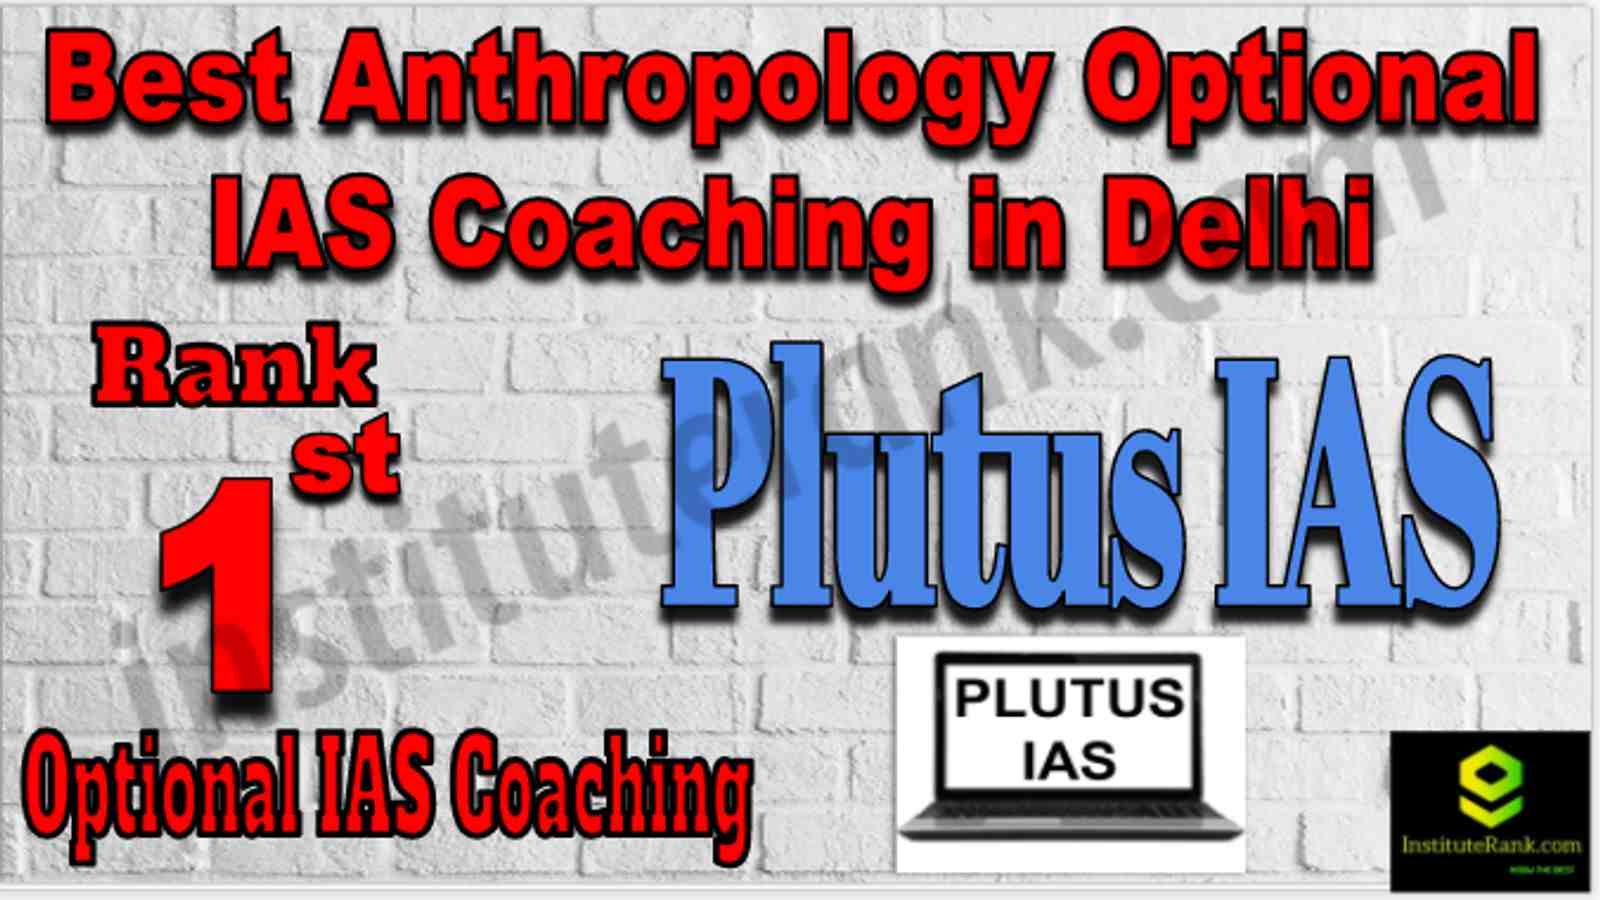 Rank 1 Best Anthropology Optional IAS Coaching